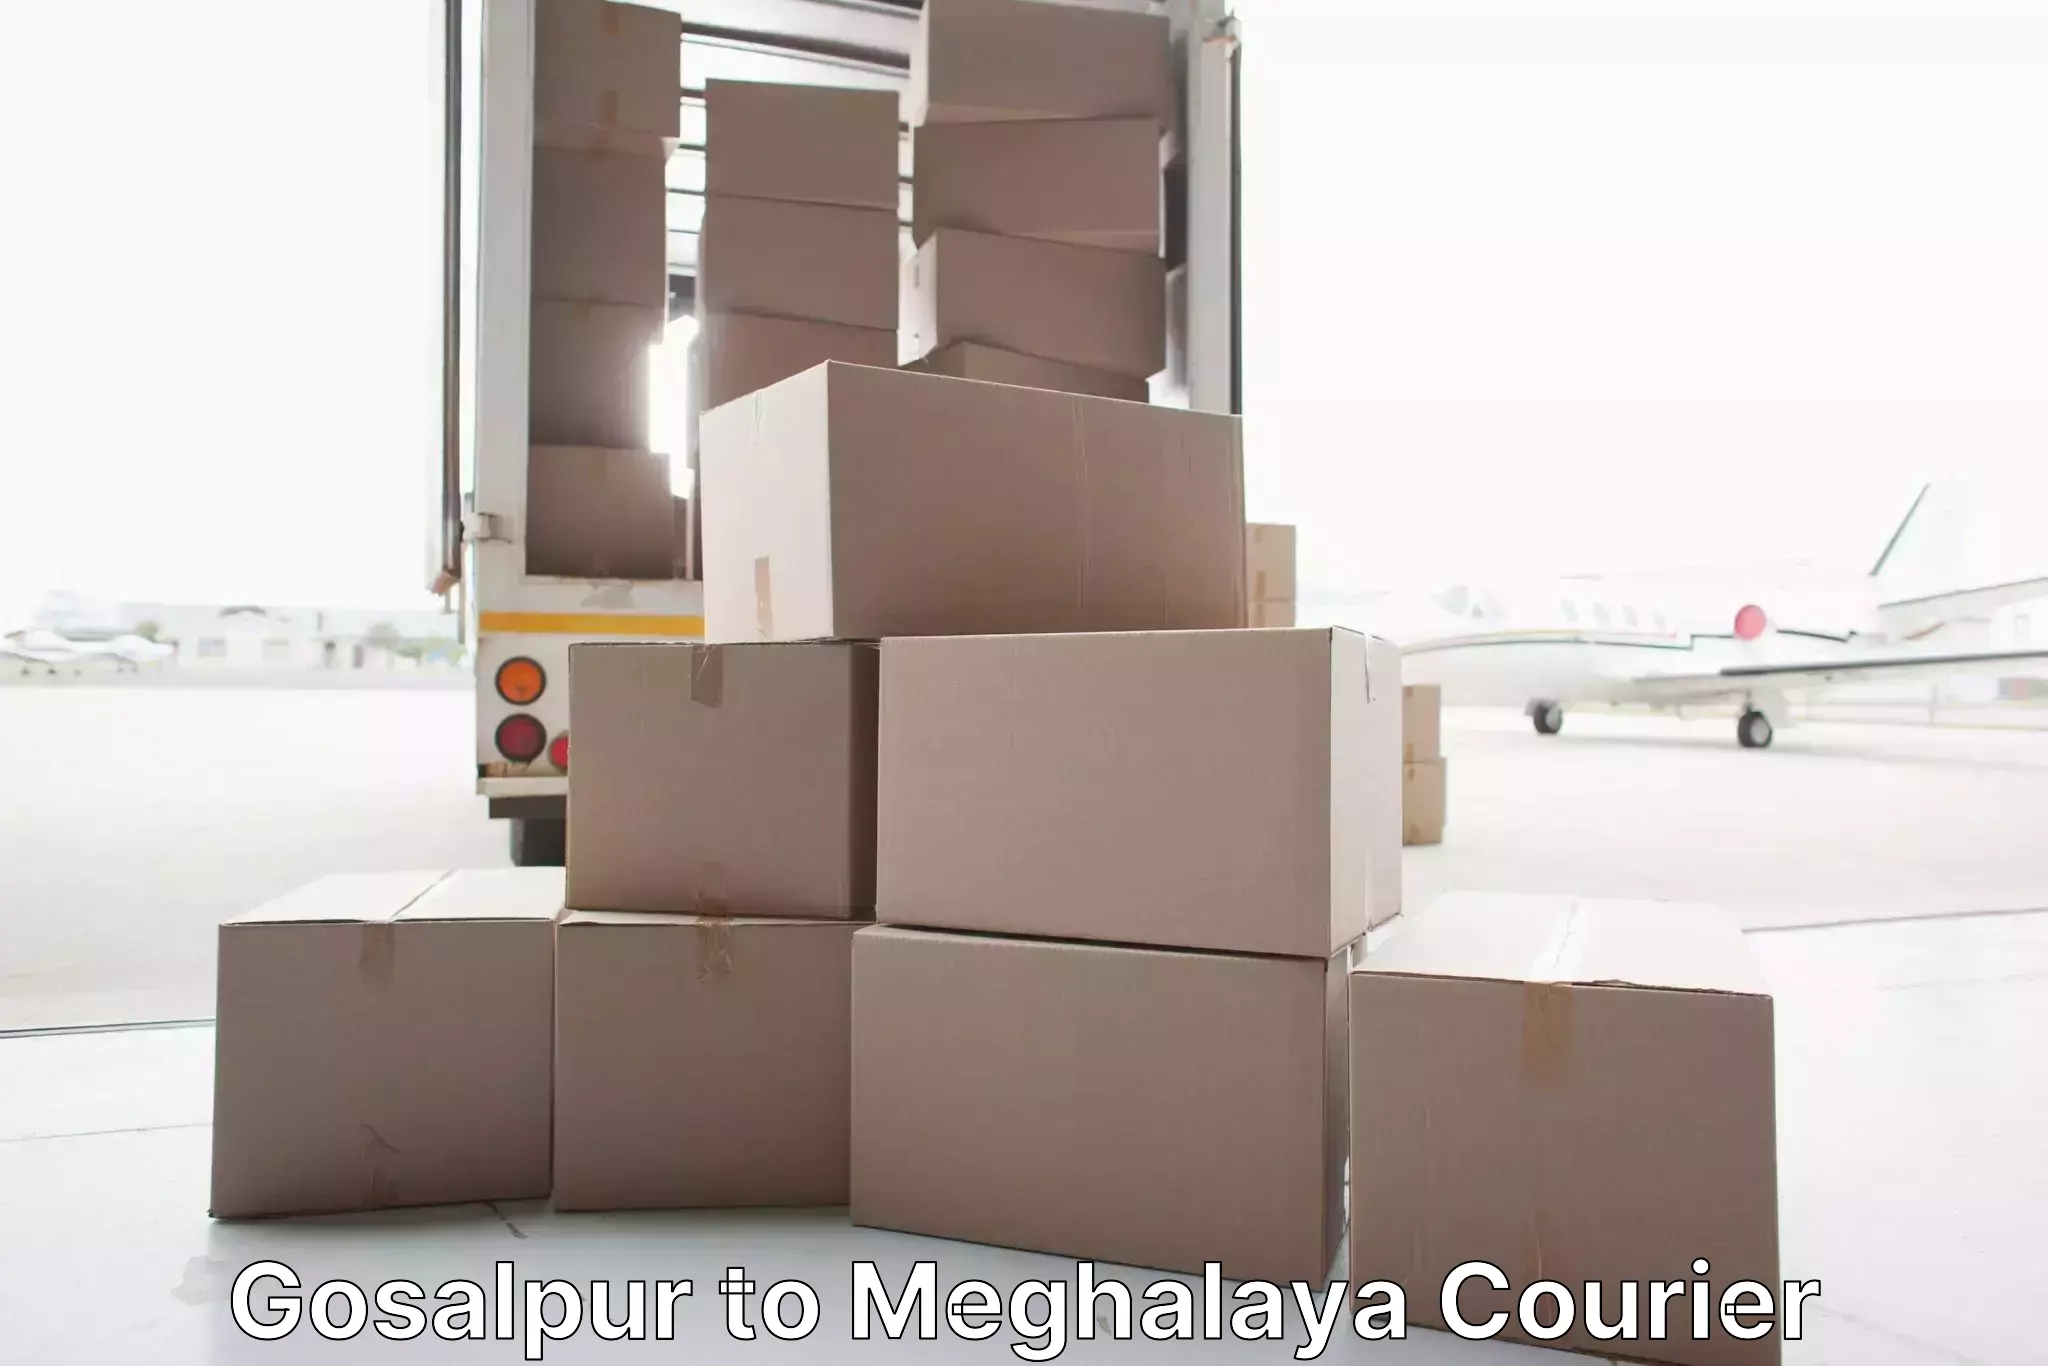 Home relocation and storage Gosalpur to Meghalaya